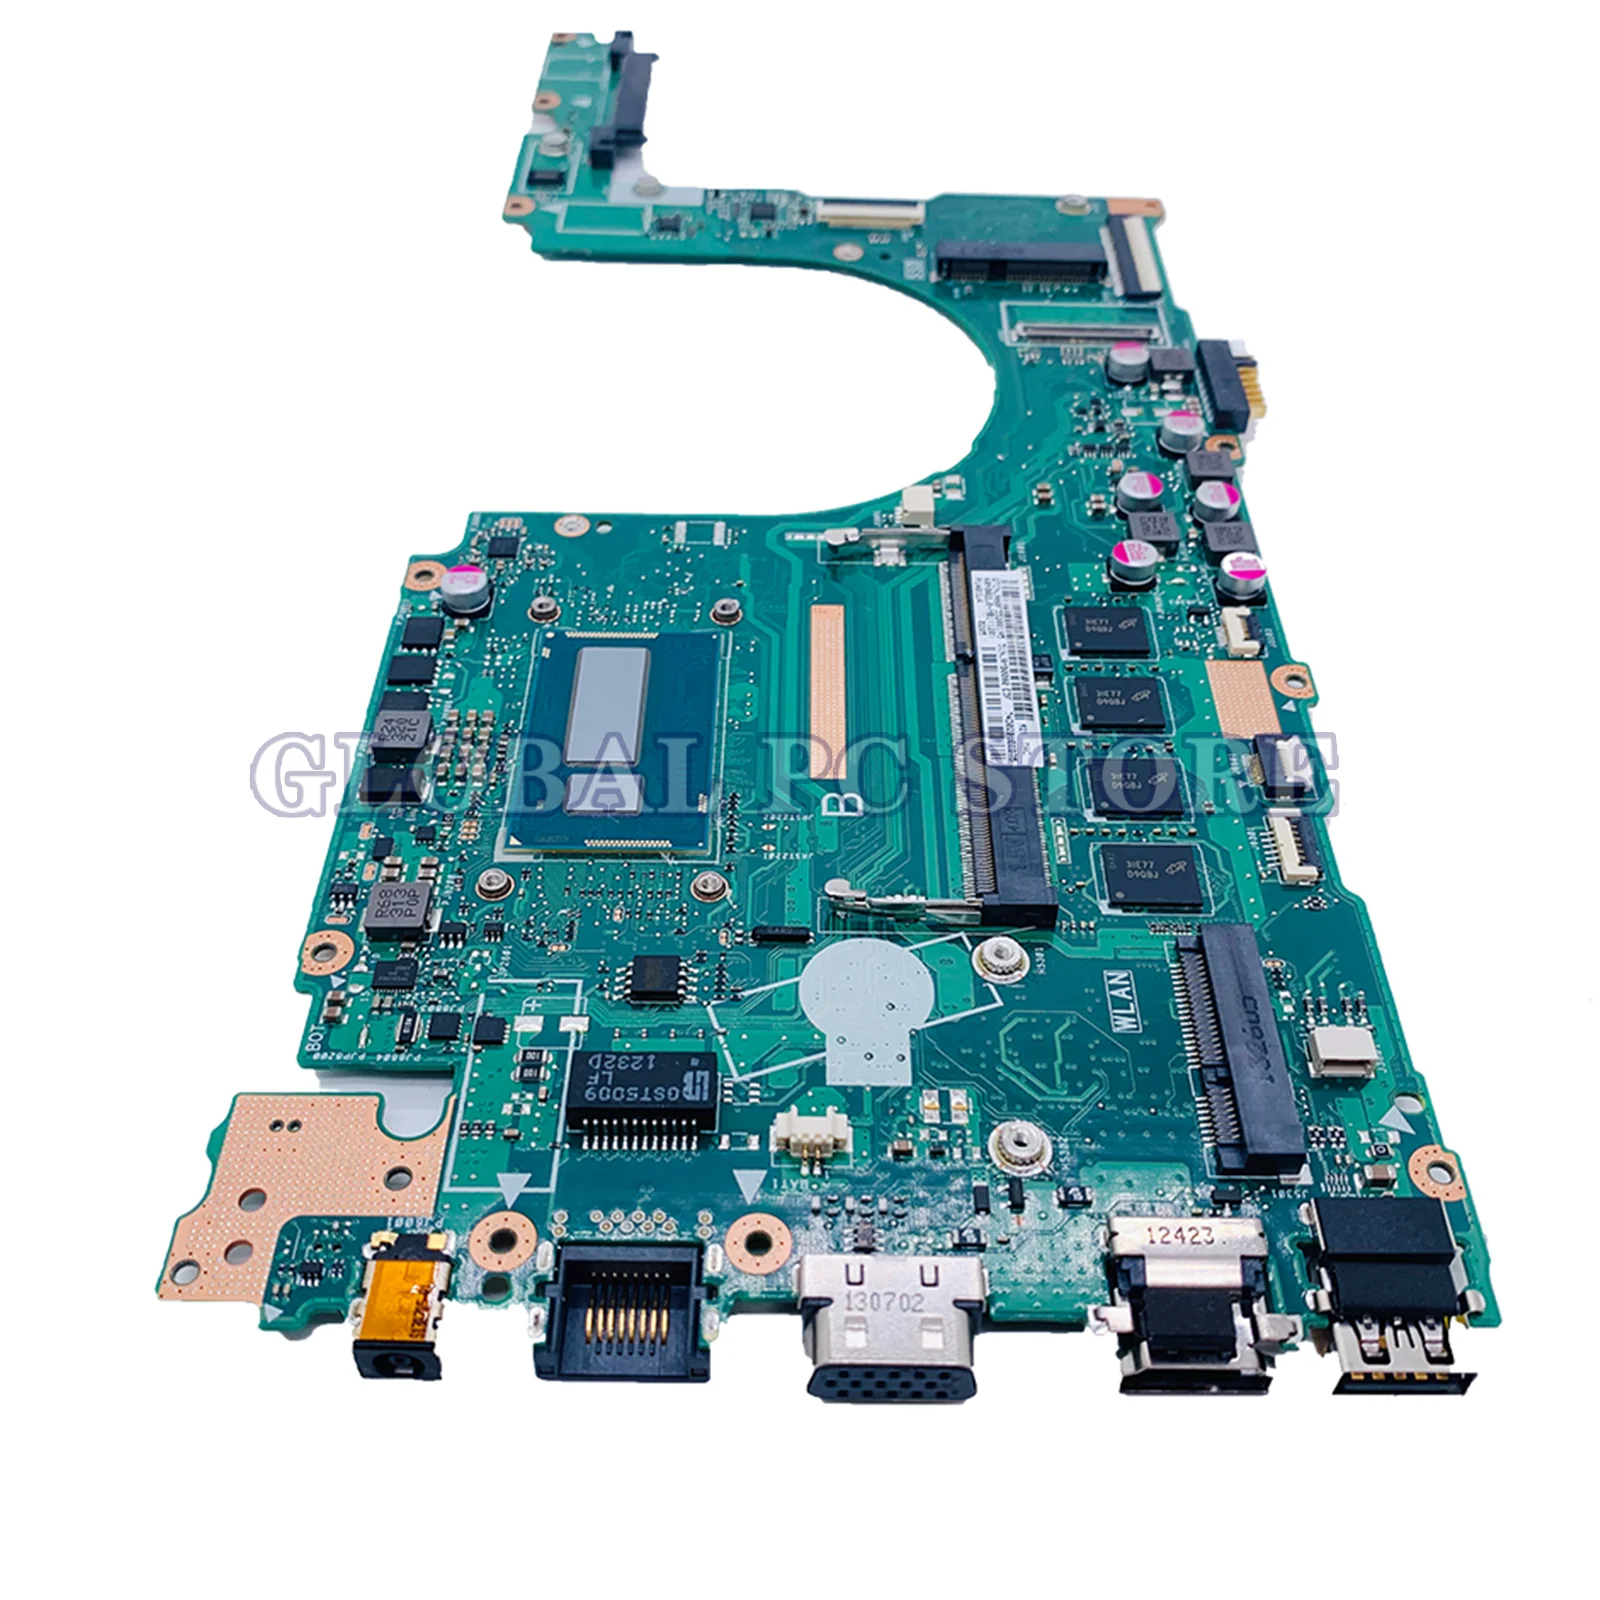 KEFU PU401L Placa de baza Pentru ASUS ASUSPRO ESSENTIAL PU401LA PU401LAC E401LA PRO401LA Placa de baza Laptop I5 I7 4th Gen 4GB/RAM DDR3L 3